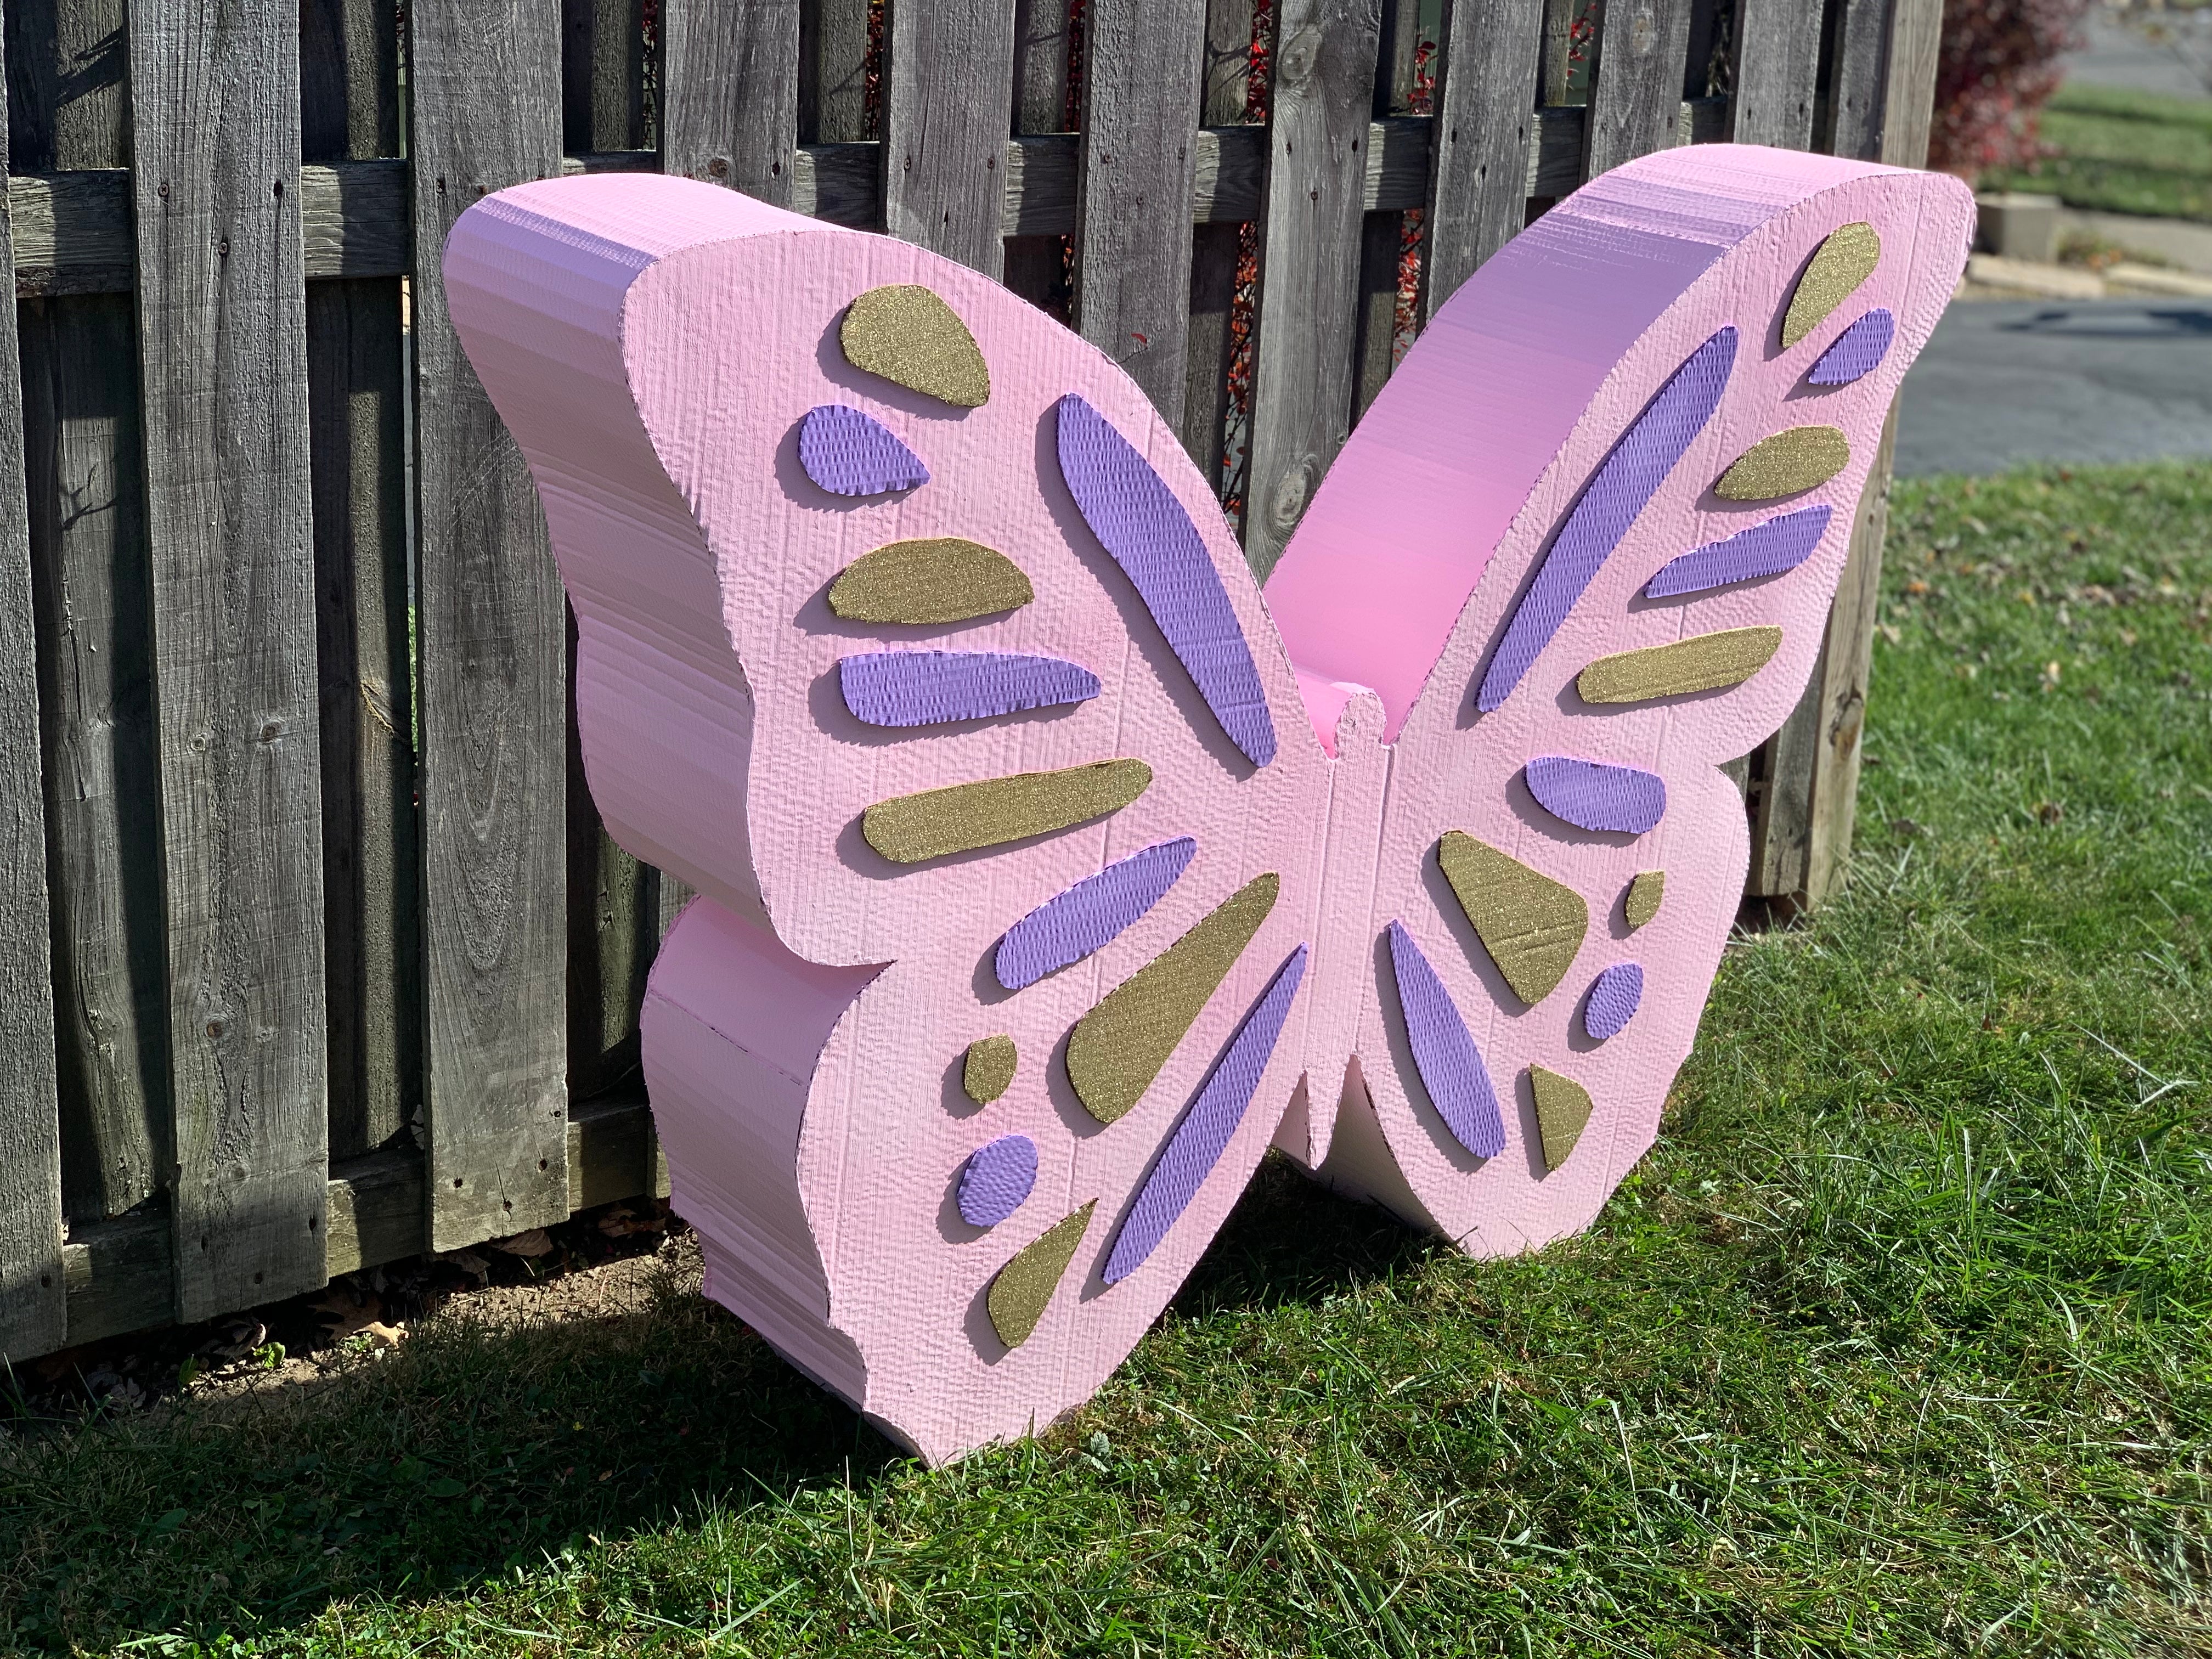 Butterfly 3D Party Prop (RENTAL)